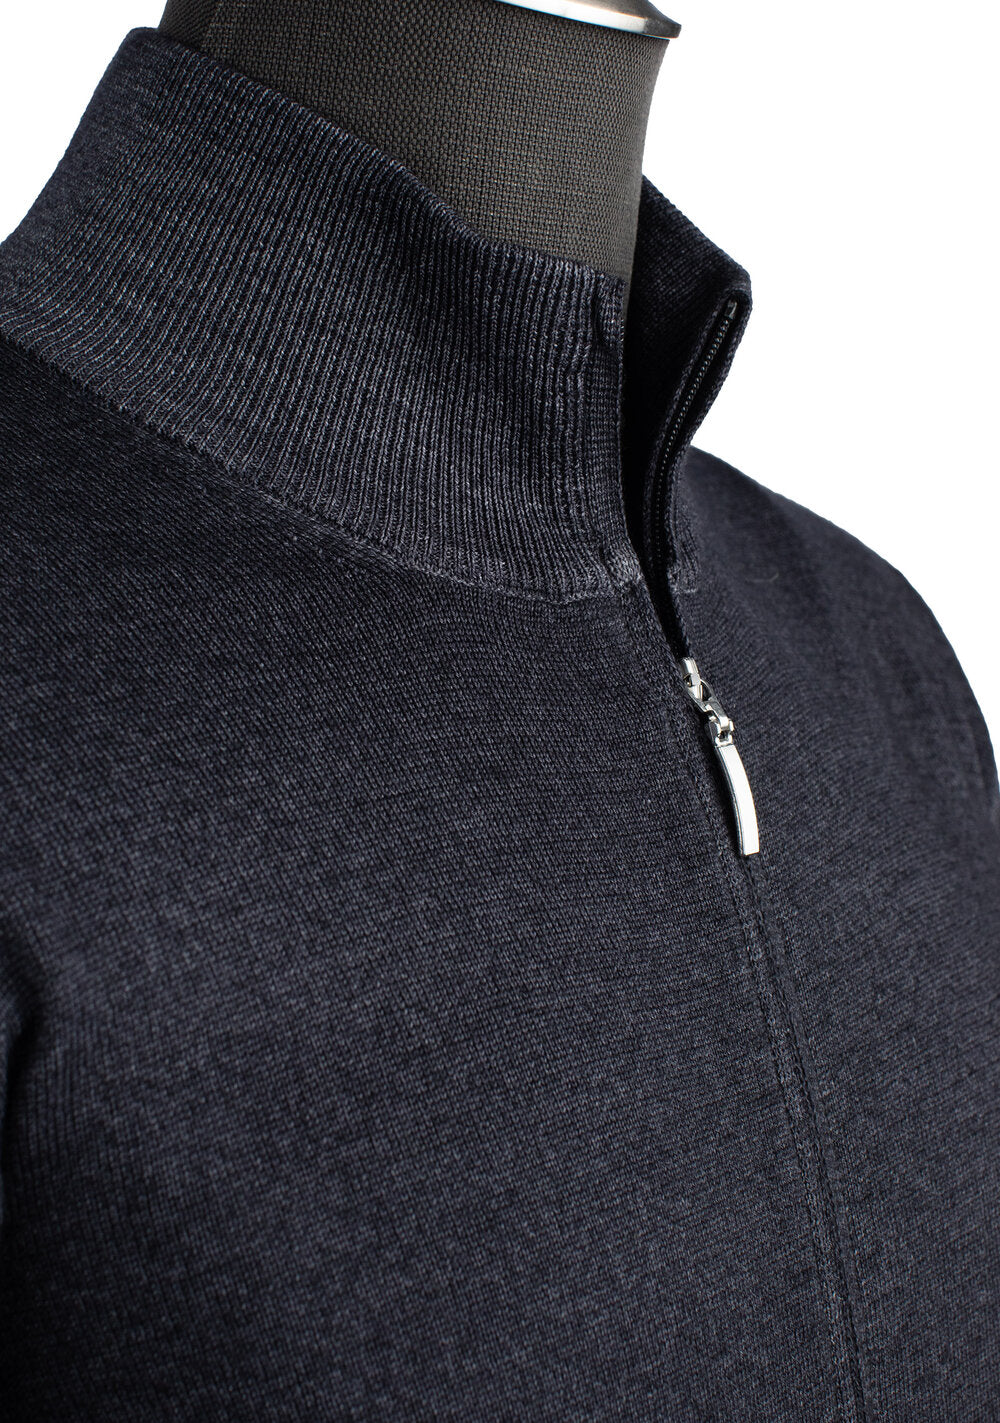 Gran Sasso Merino Wool Full-Zip Sweater in Charcoal Gray